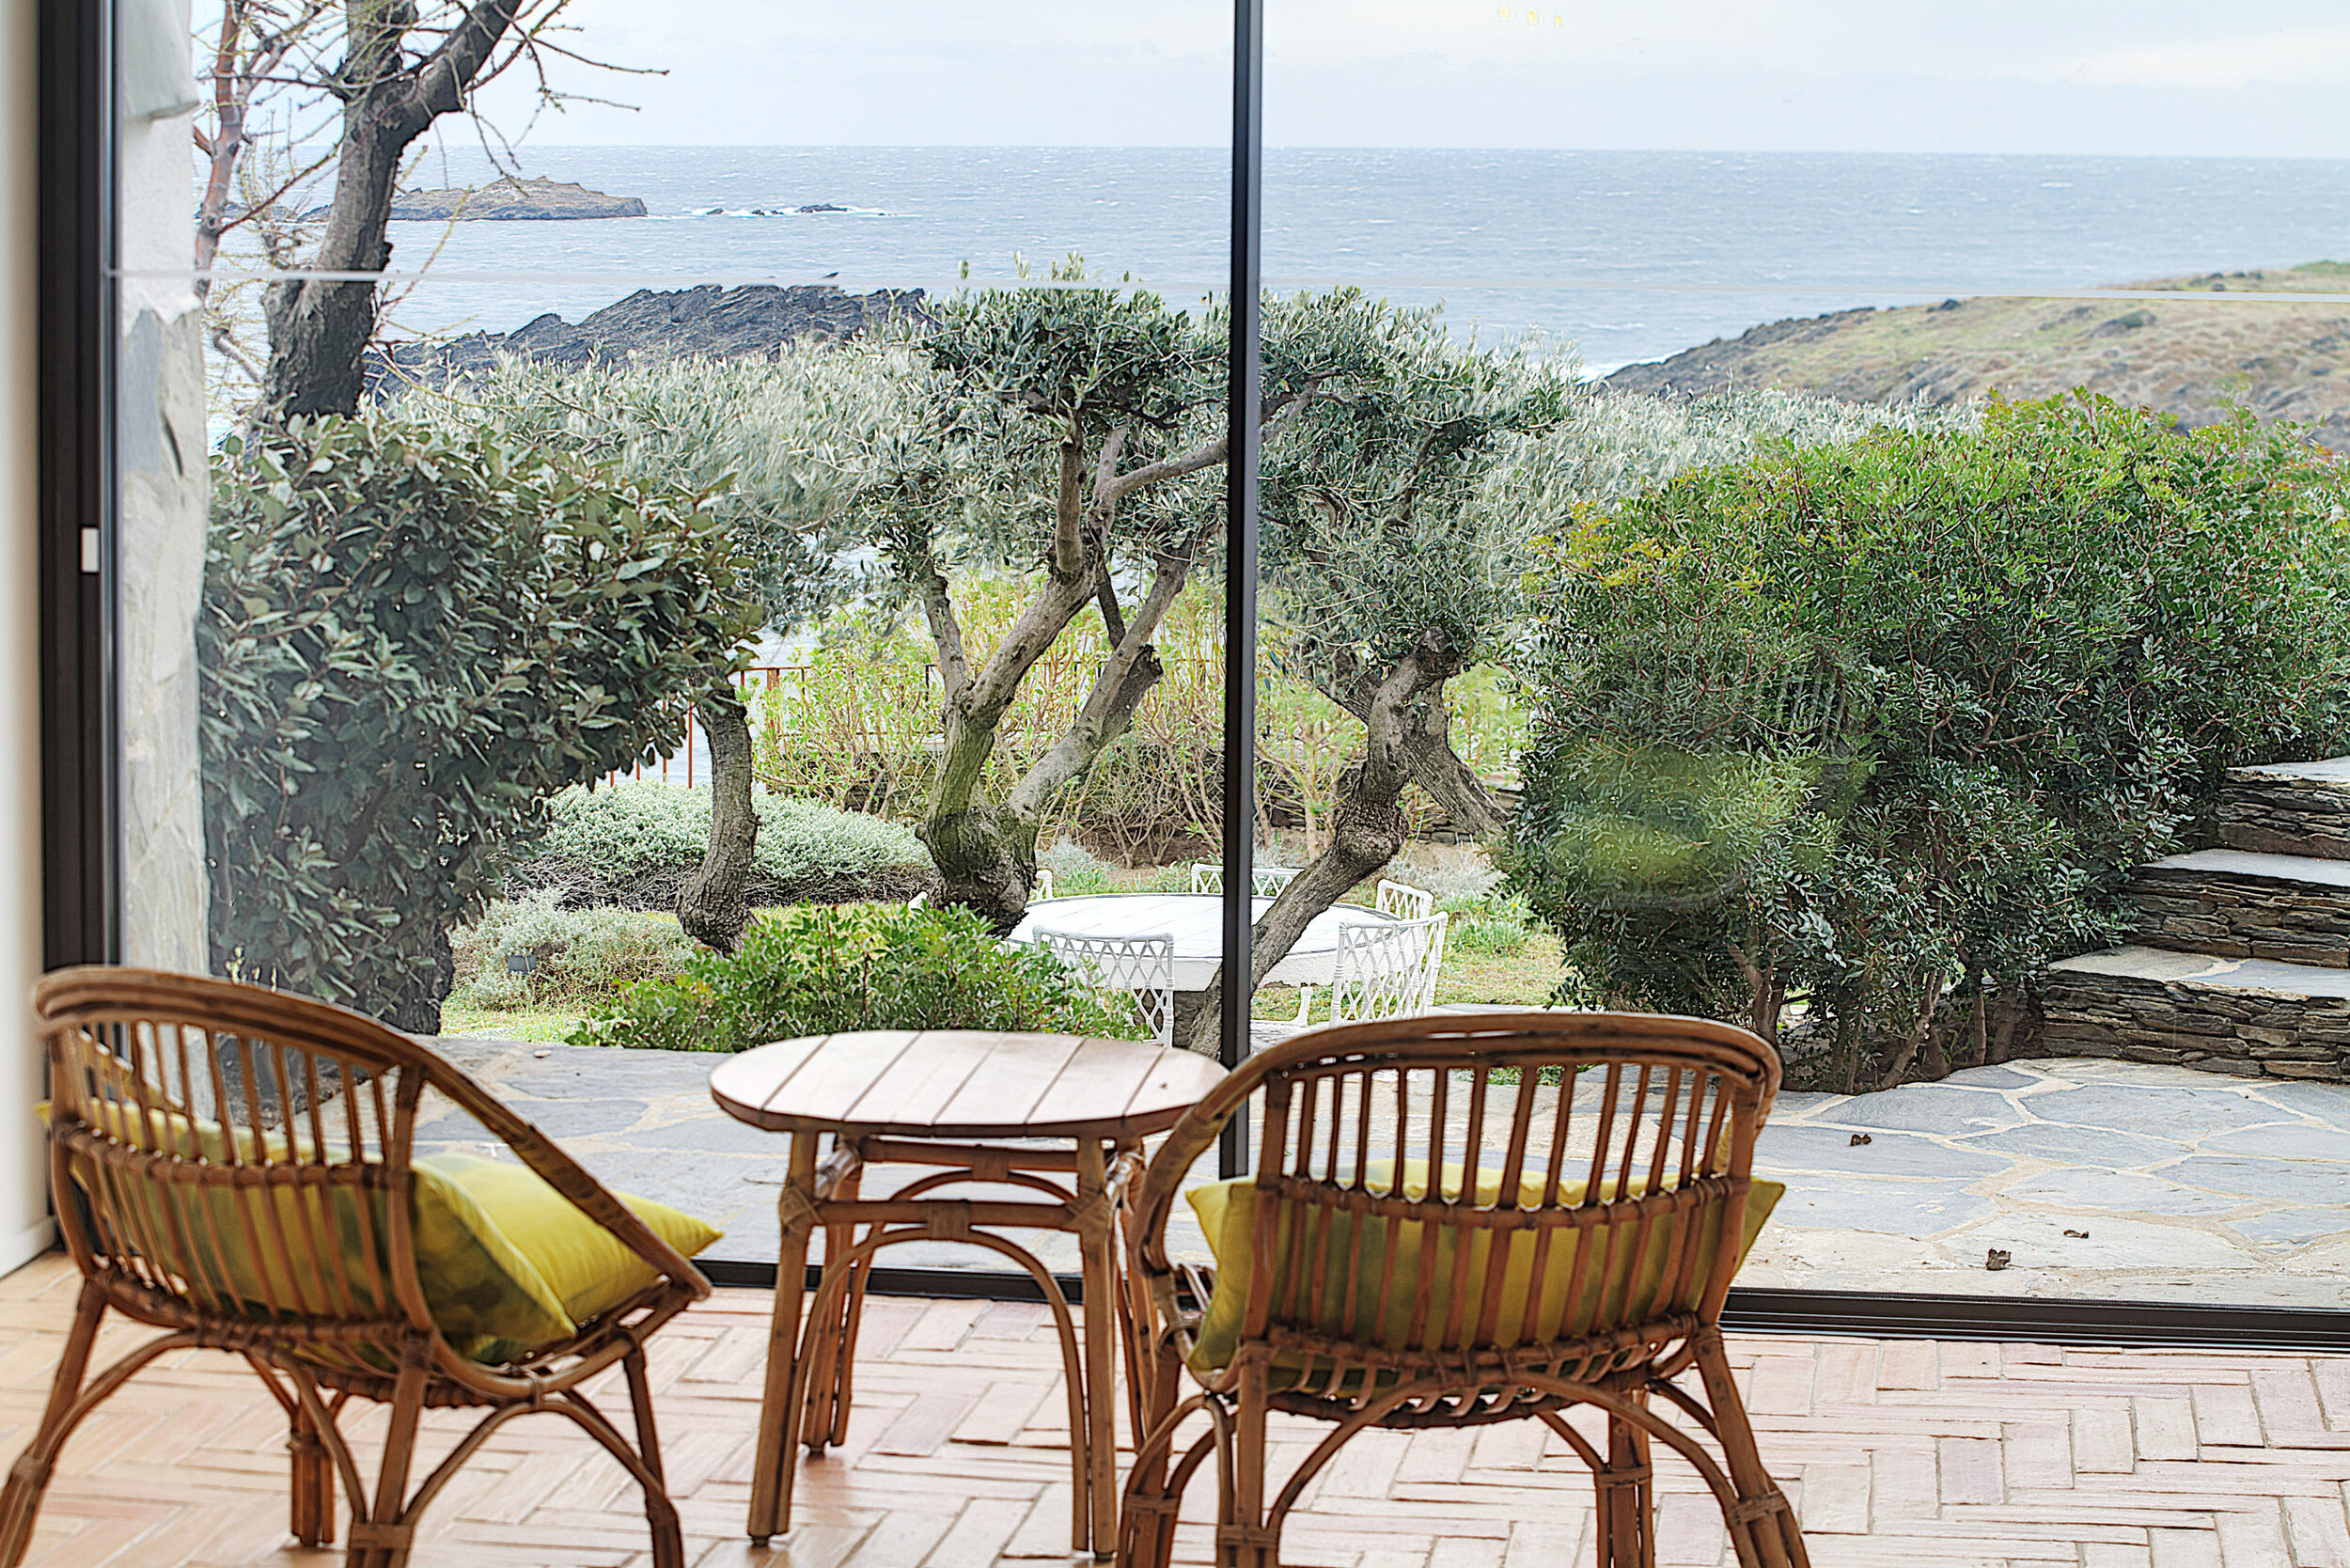 Prestigious estate in Cadaqués, Spain, with swimming pool overlooking the Mediterranean Sea